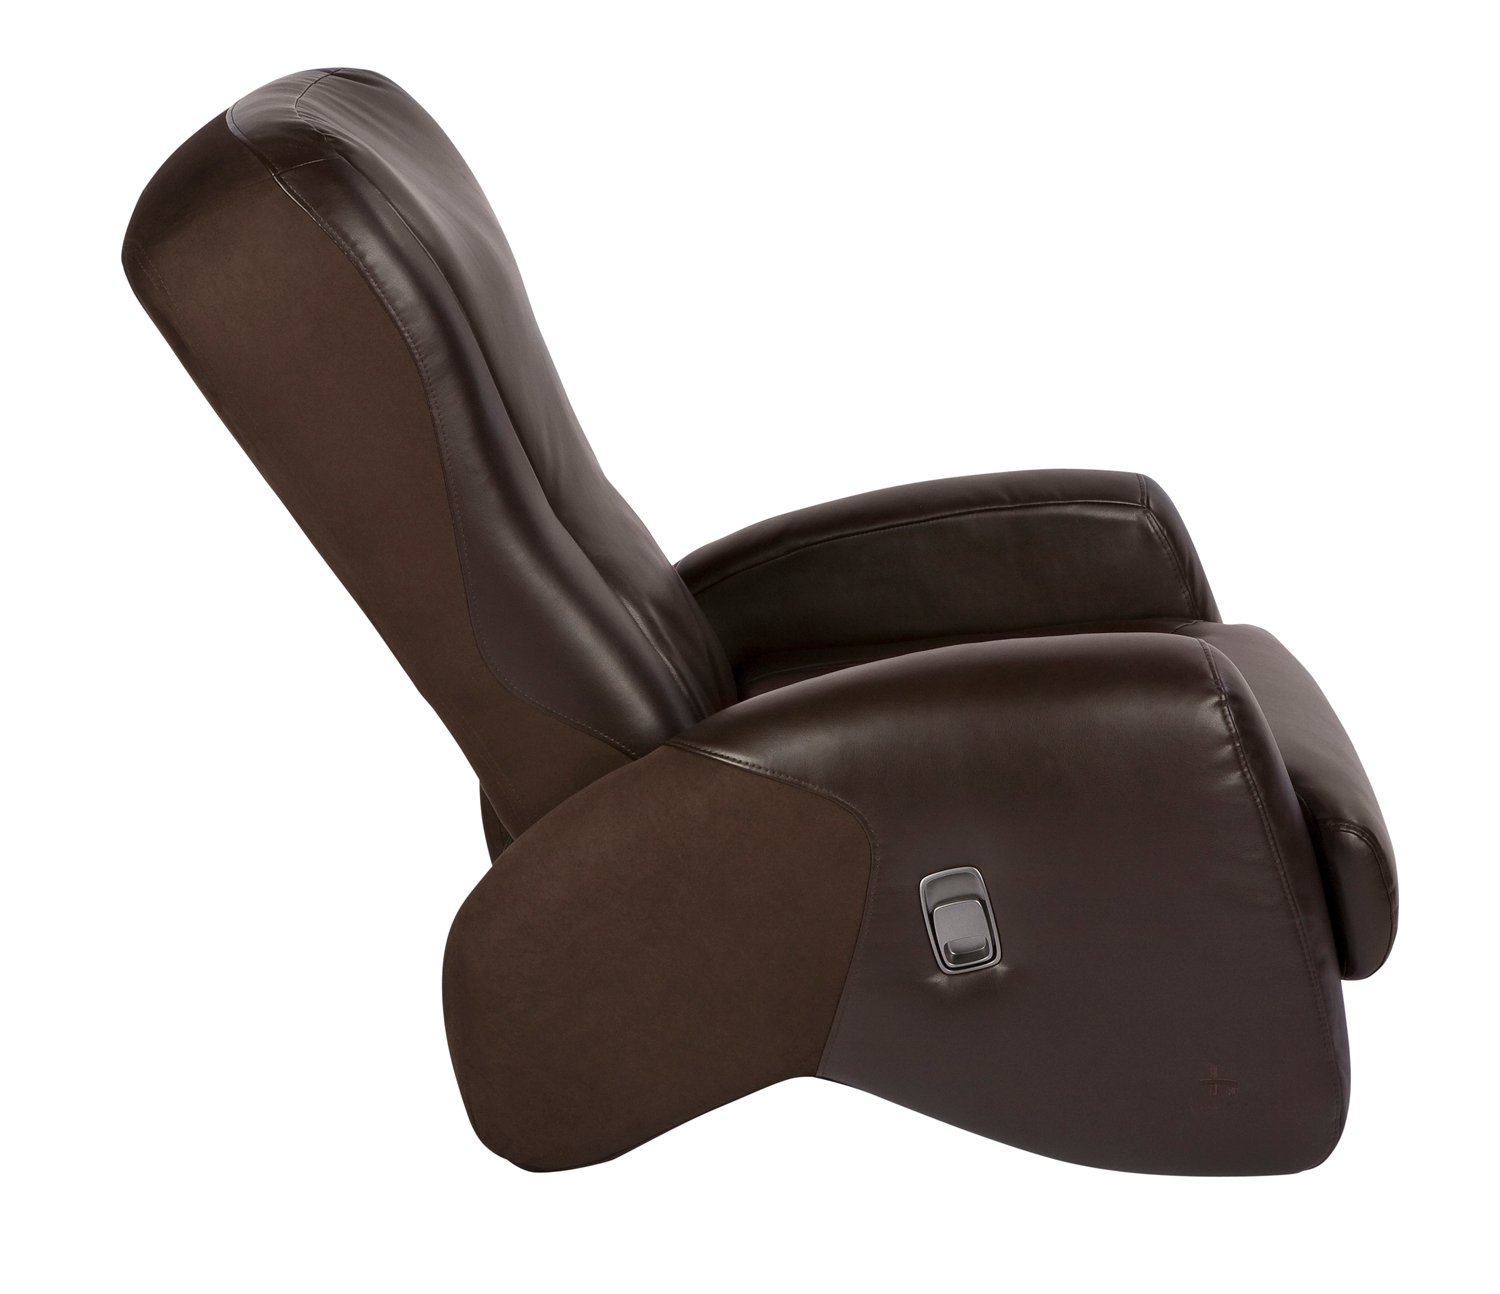 iJoy-2310 Robotic Massage Chair